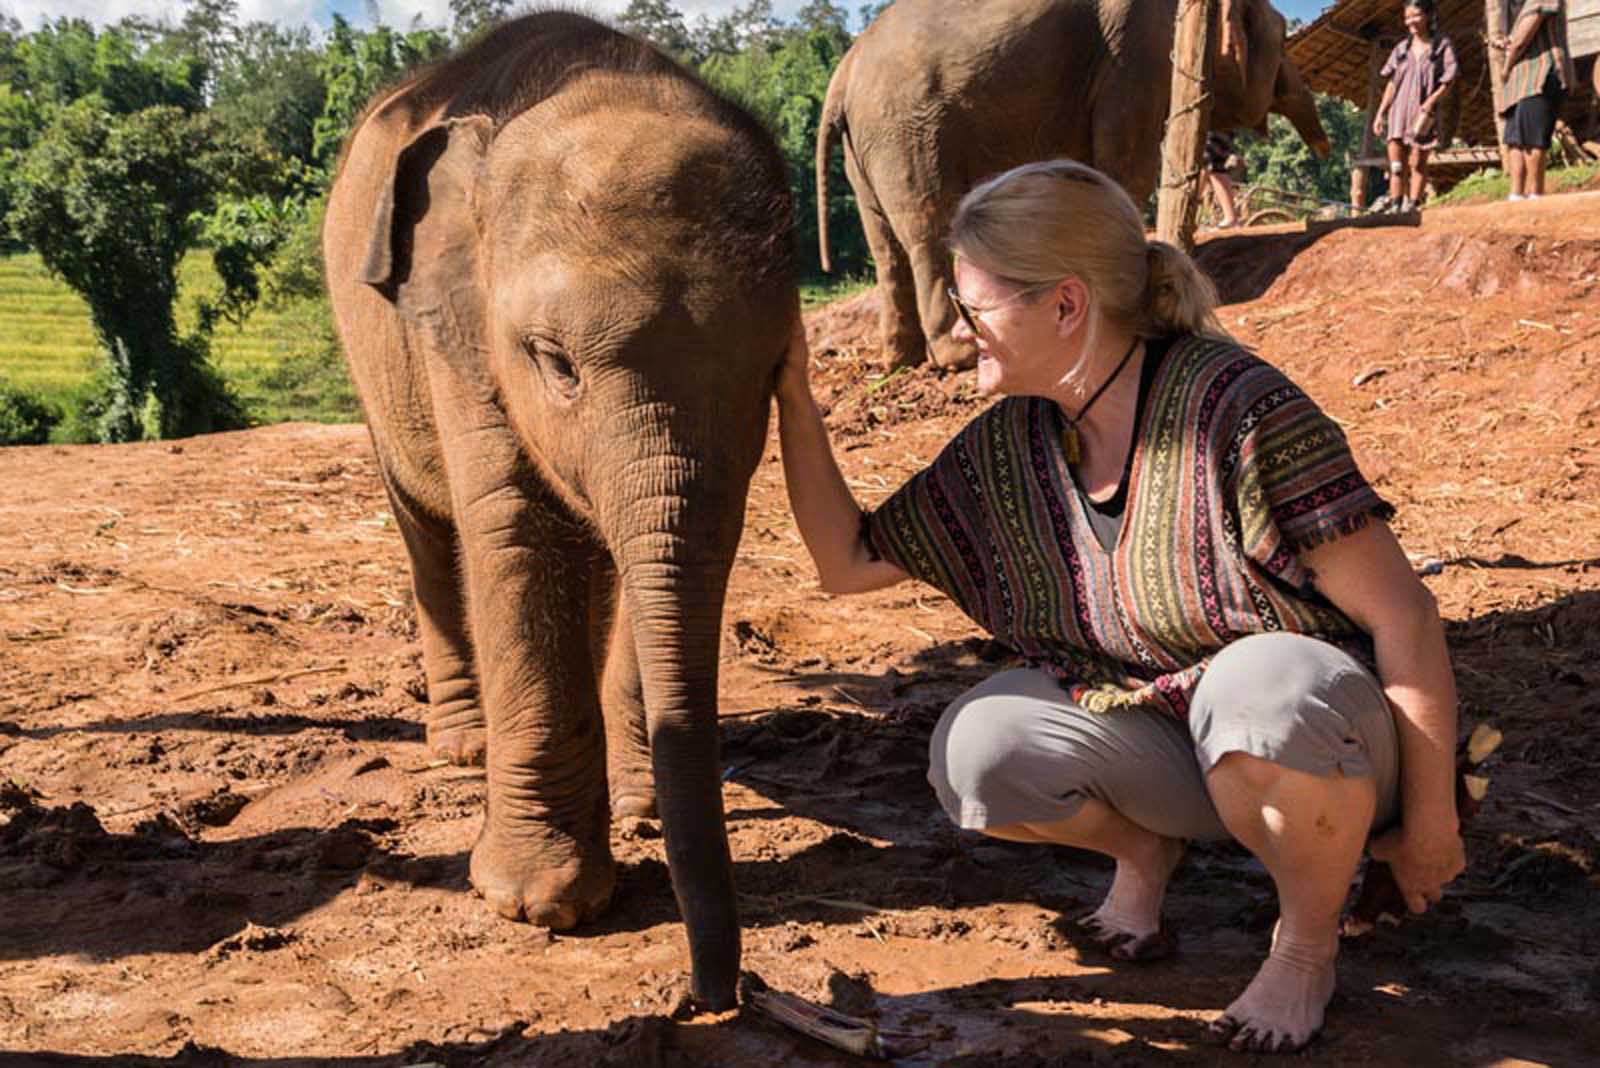 thailand travel tips don't ride elephants